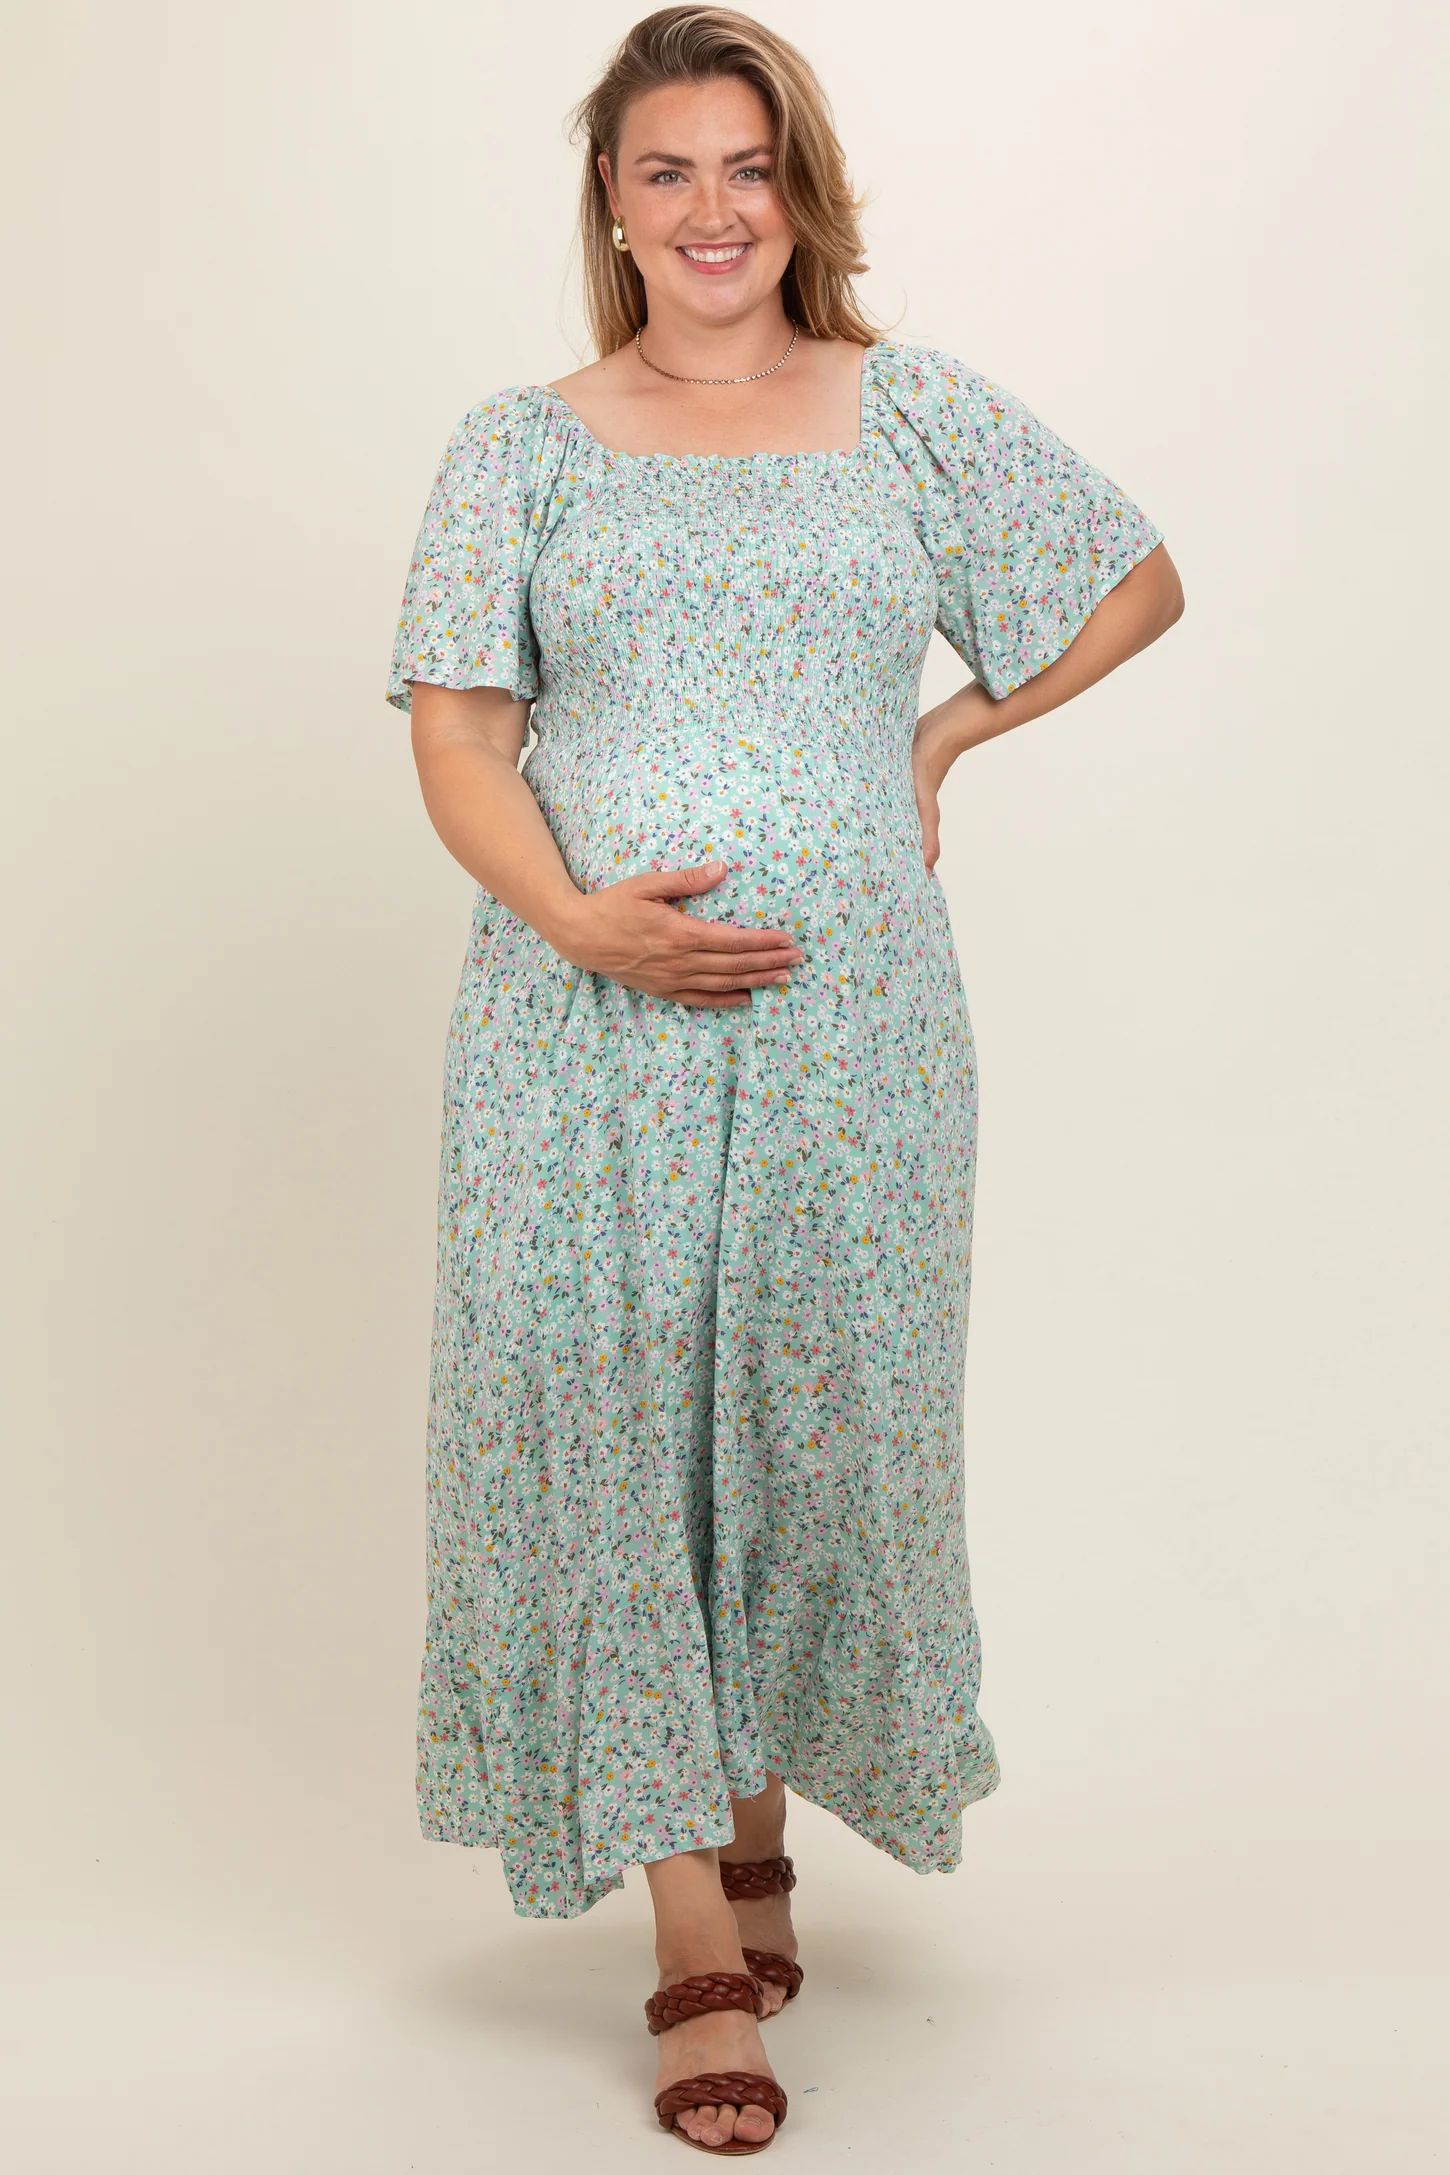 Mint Floral Smocked Plus Maternity Maxi Dress | PinkBlush Maternity